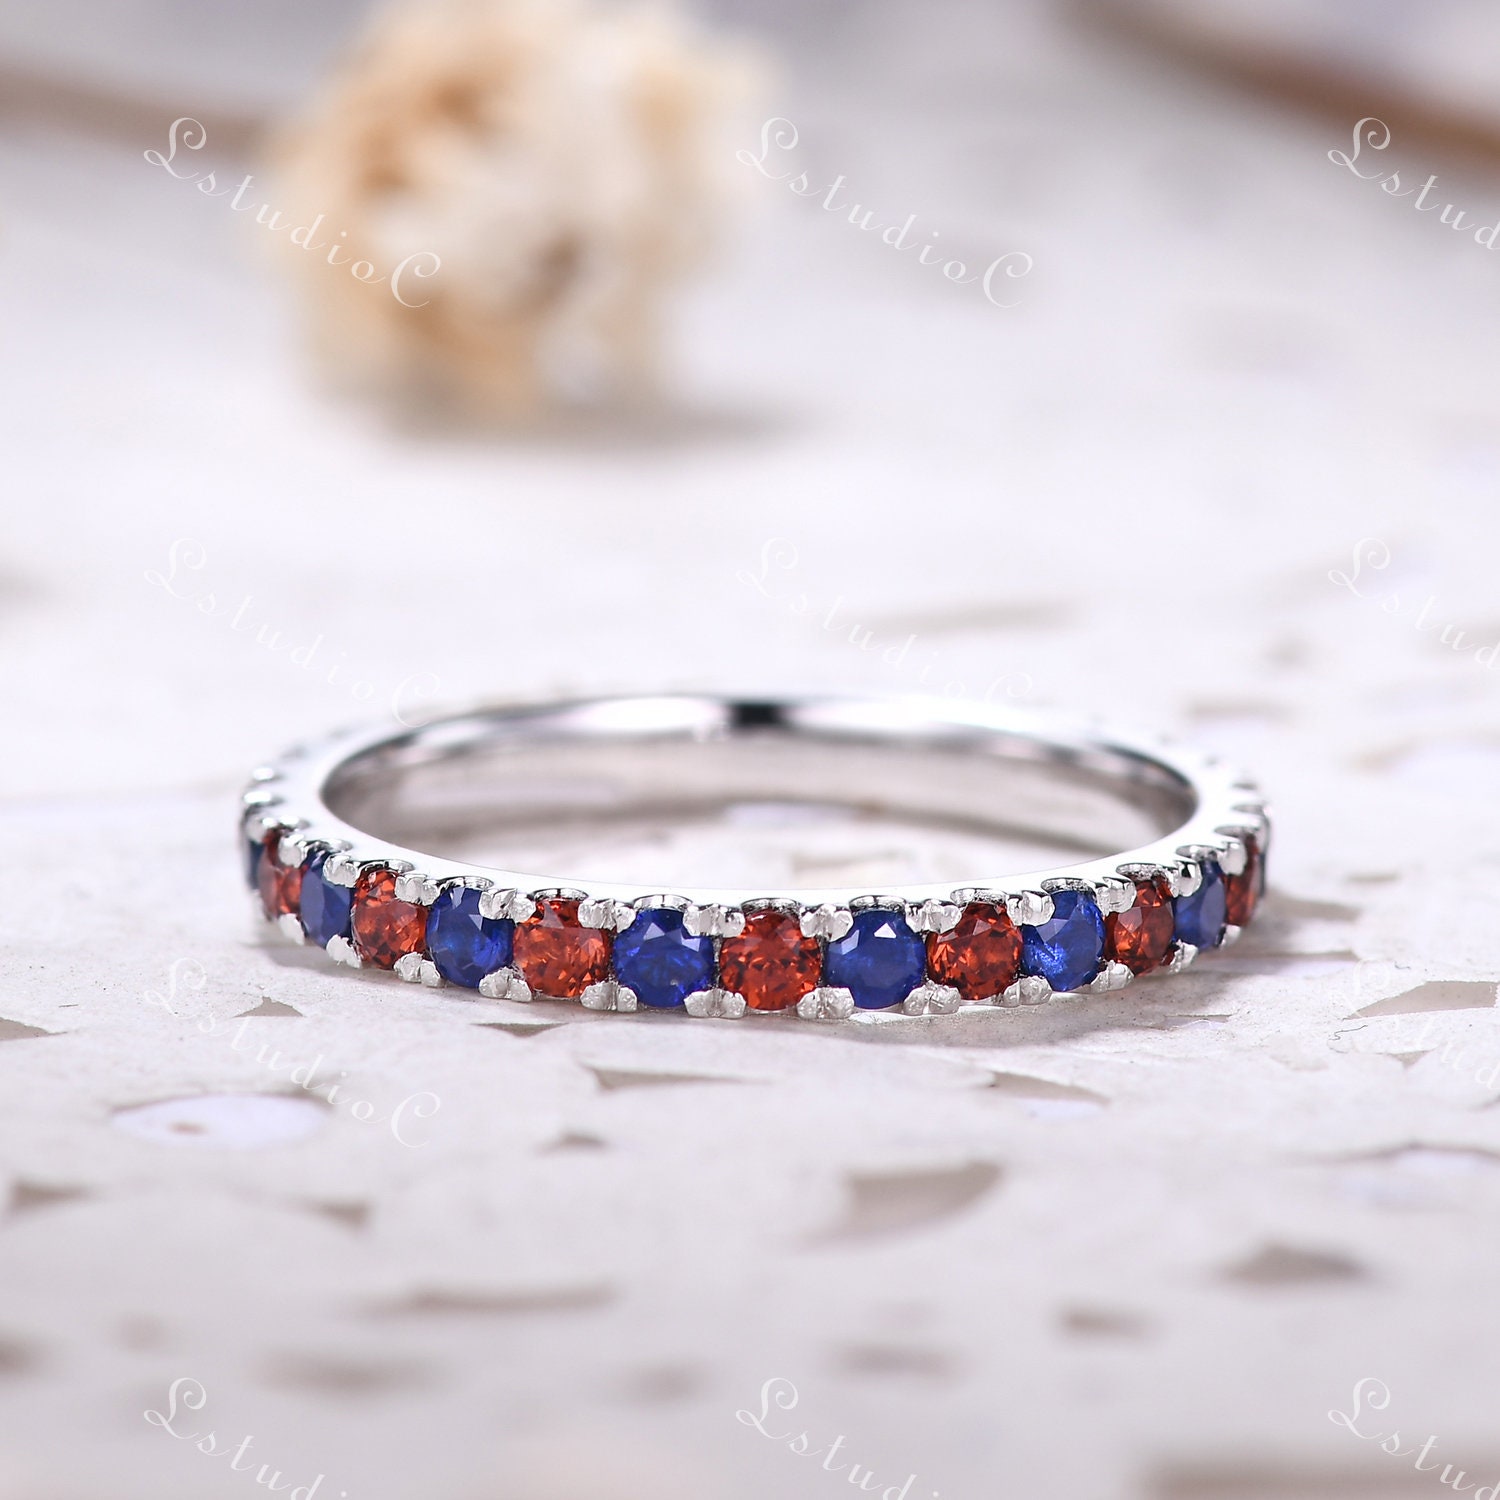 2mm Sapphire Garnet Engagement Ring Band Silver White Gold Bridal Wedding Band Birthstone Stacking Ring Minimalist Blue Red Gemstone Ring